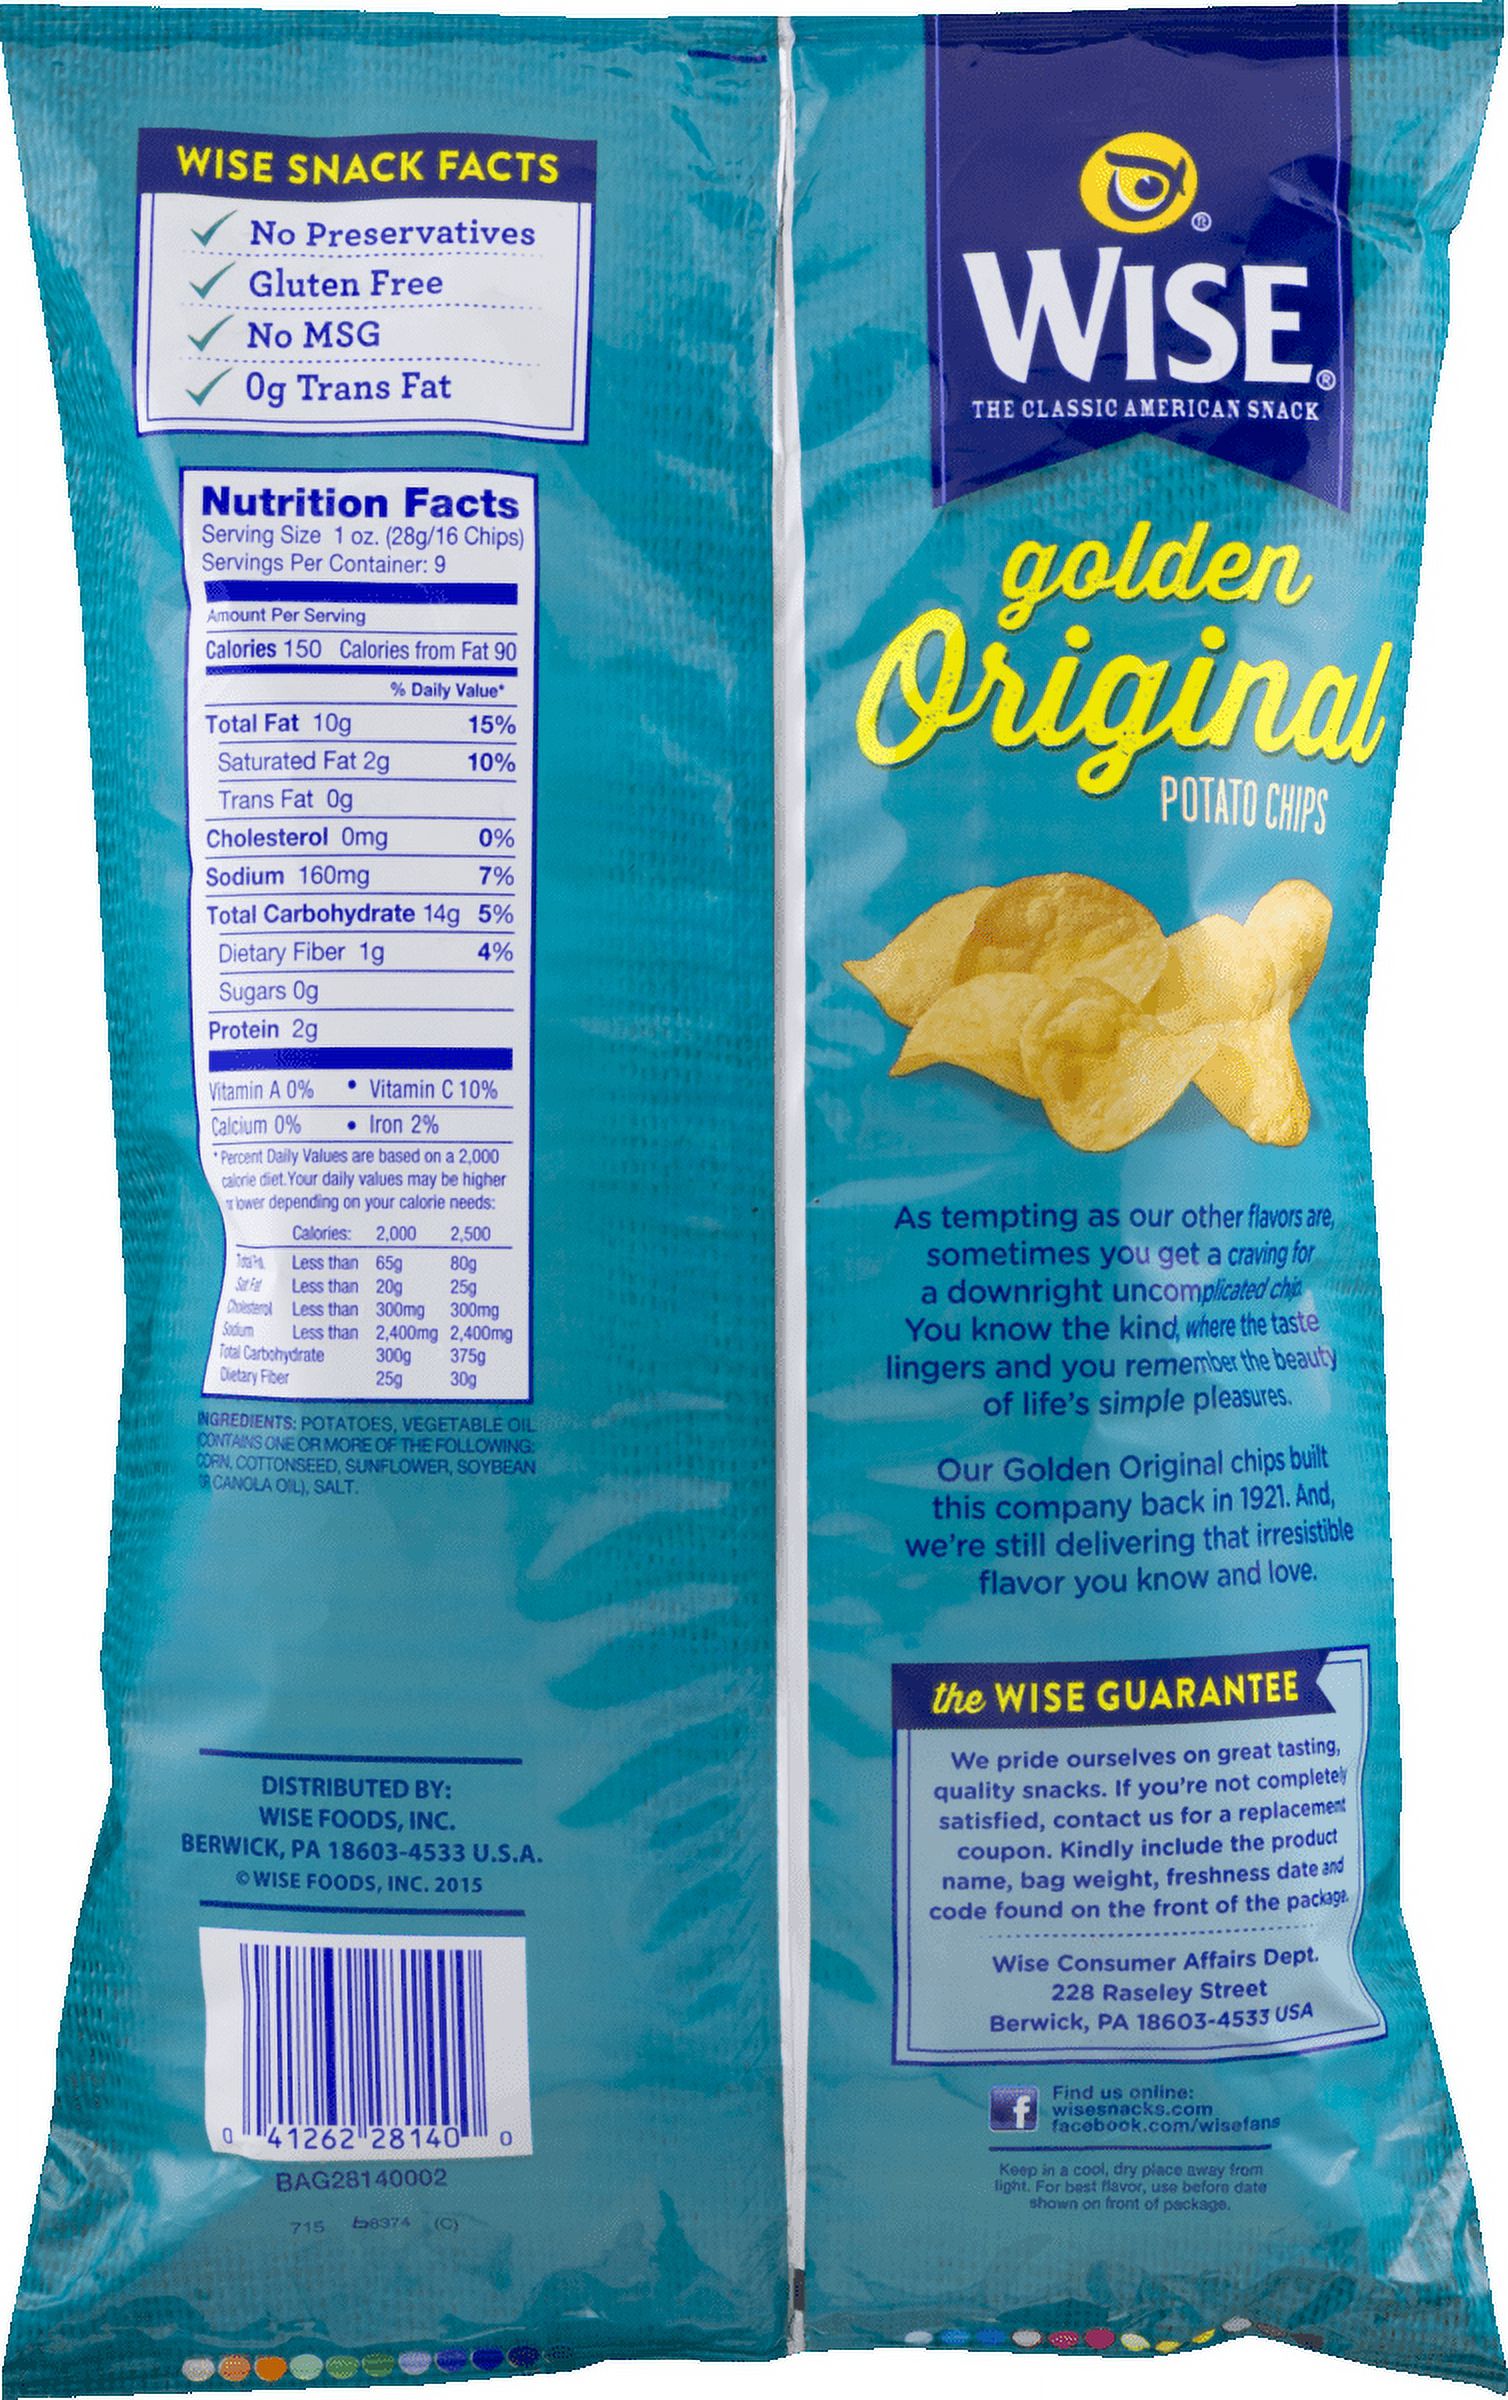 Wise Foods Golden Original Potato Chips, 3-Pack 7.5 oz. Bags - image 2 of 3